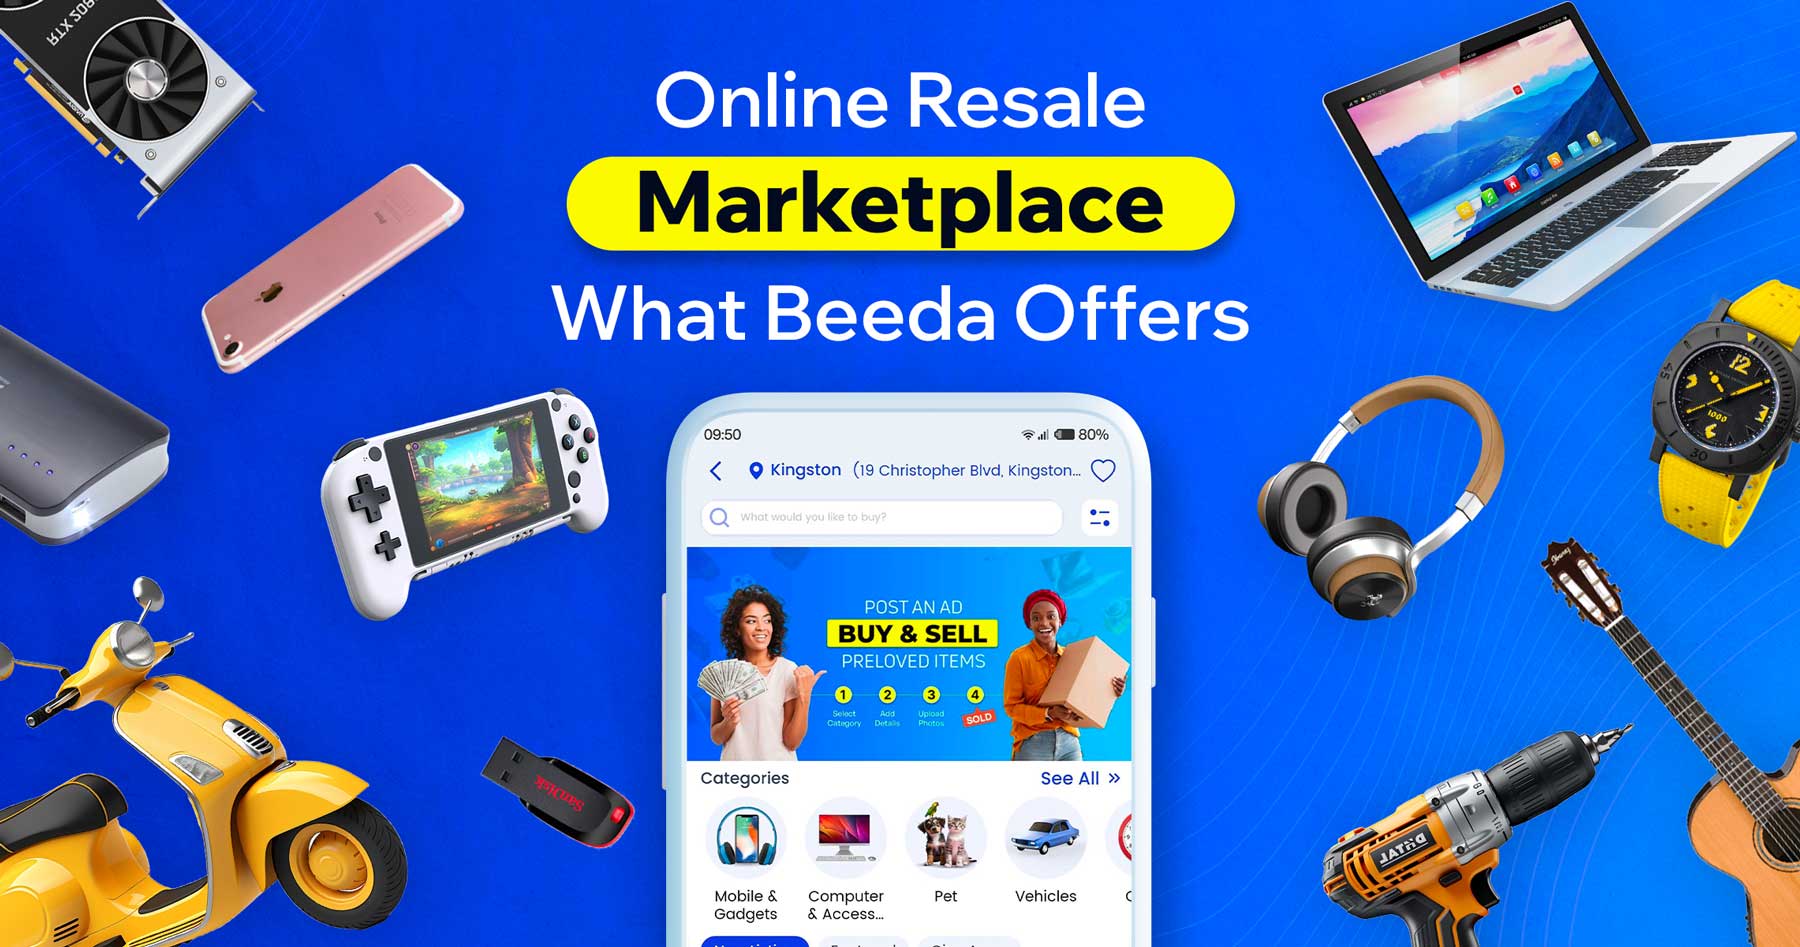 Online Resale Marketplace